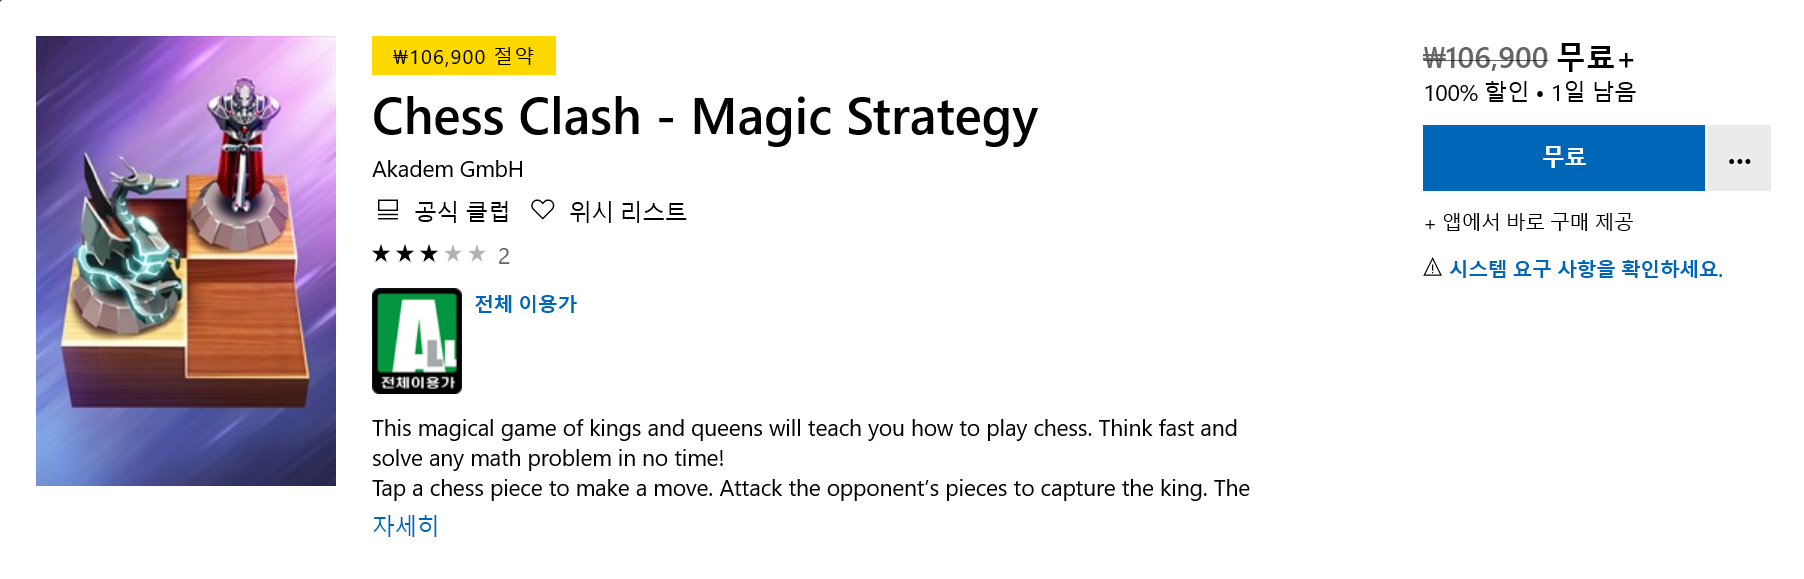 Screenshot_2020-04-01 Chess Clash - Magic Strategy 구매 - Microsoft Store ko-KR.png